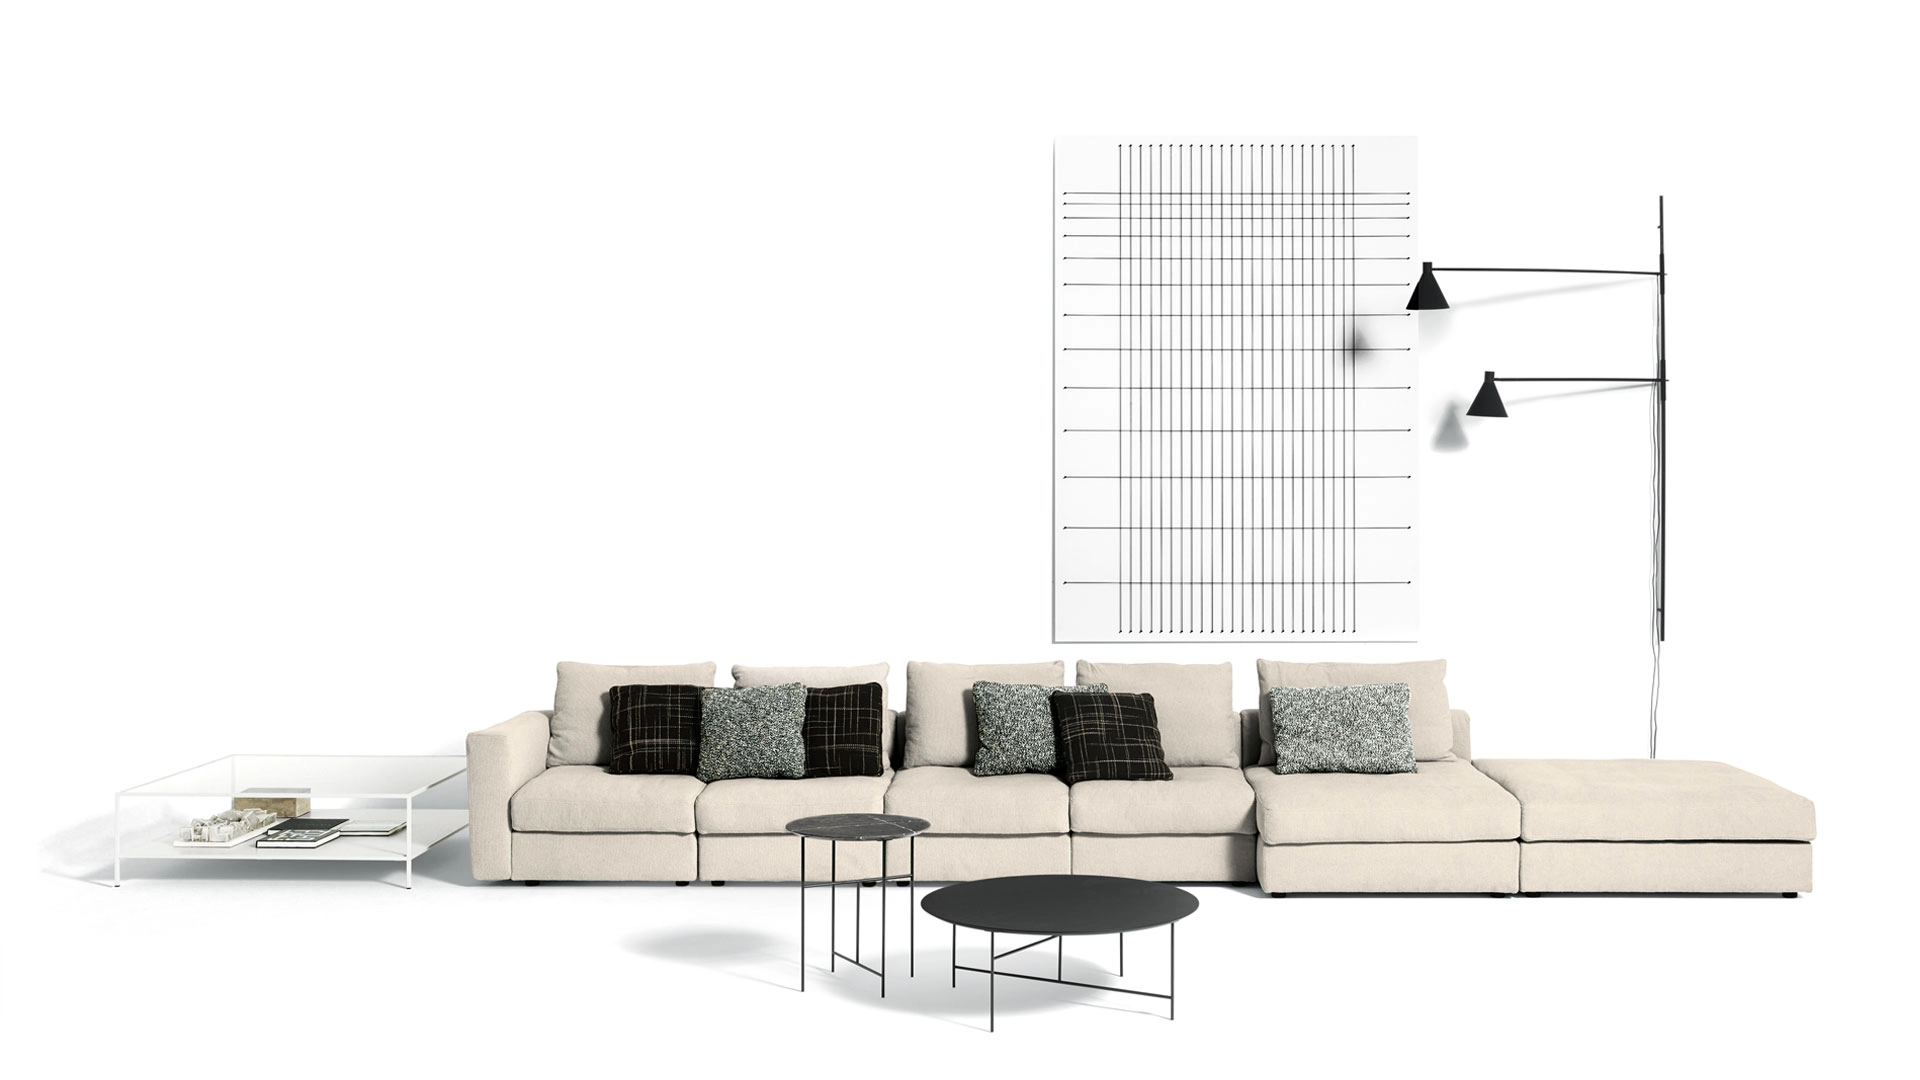 Mosaïque: sofa designed by Piero Lissoni